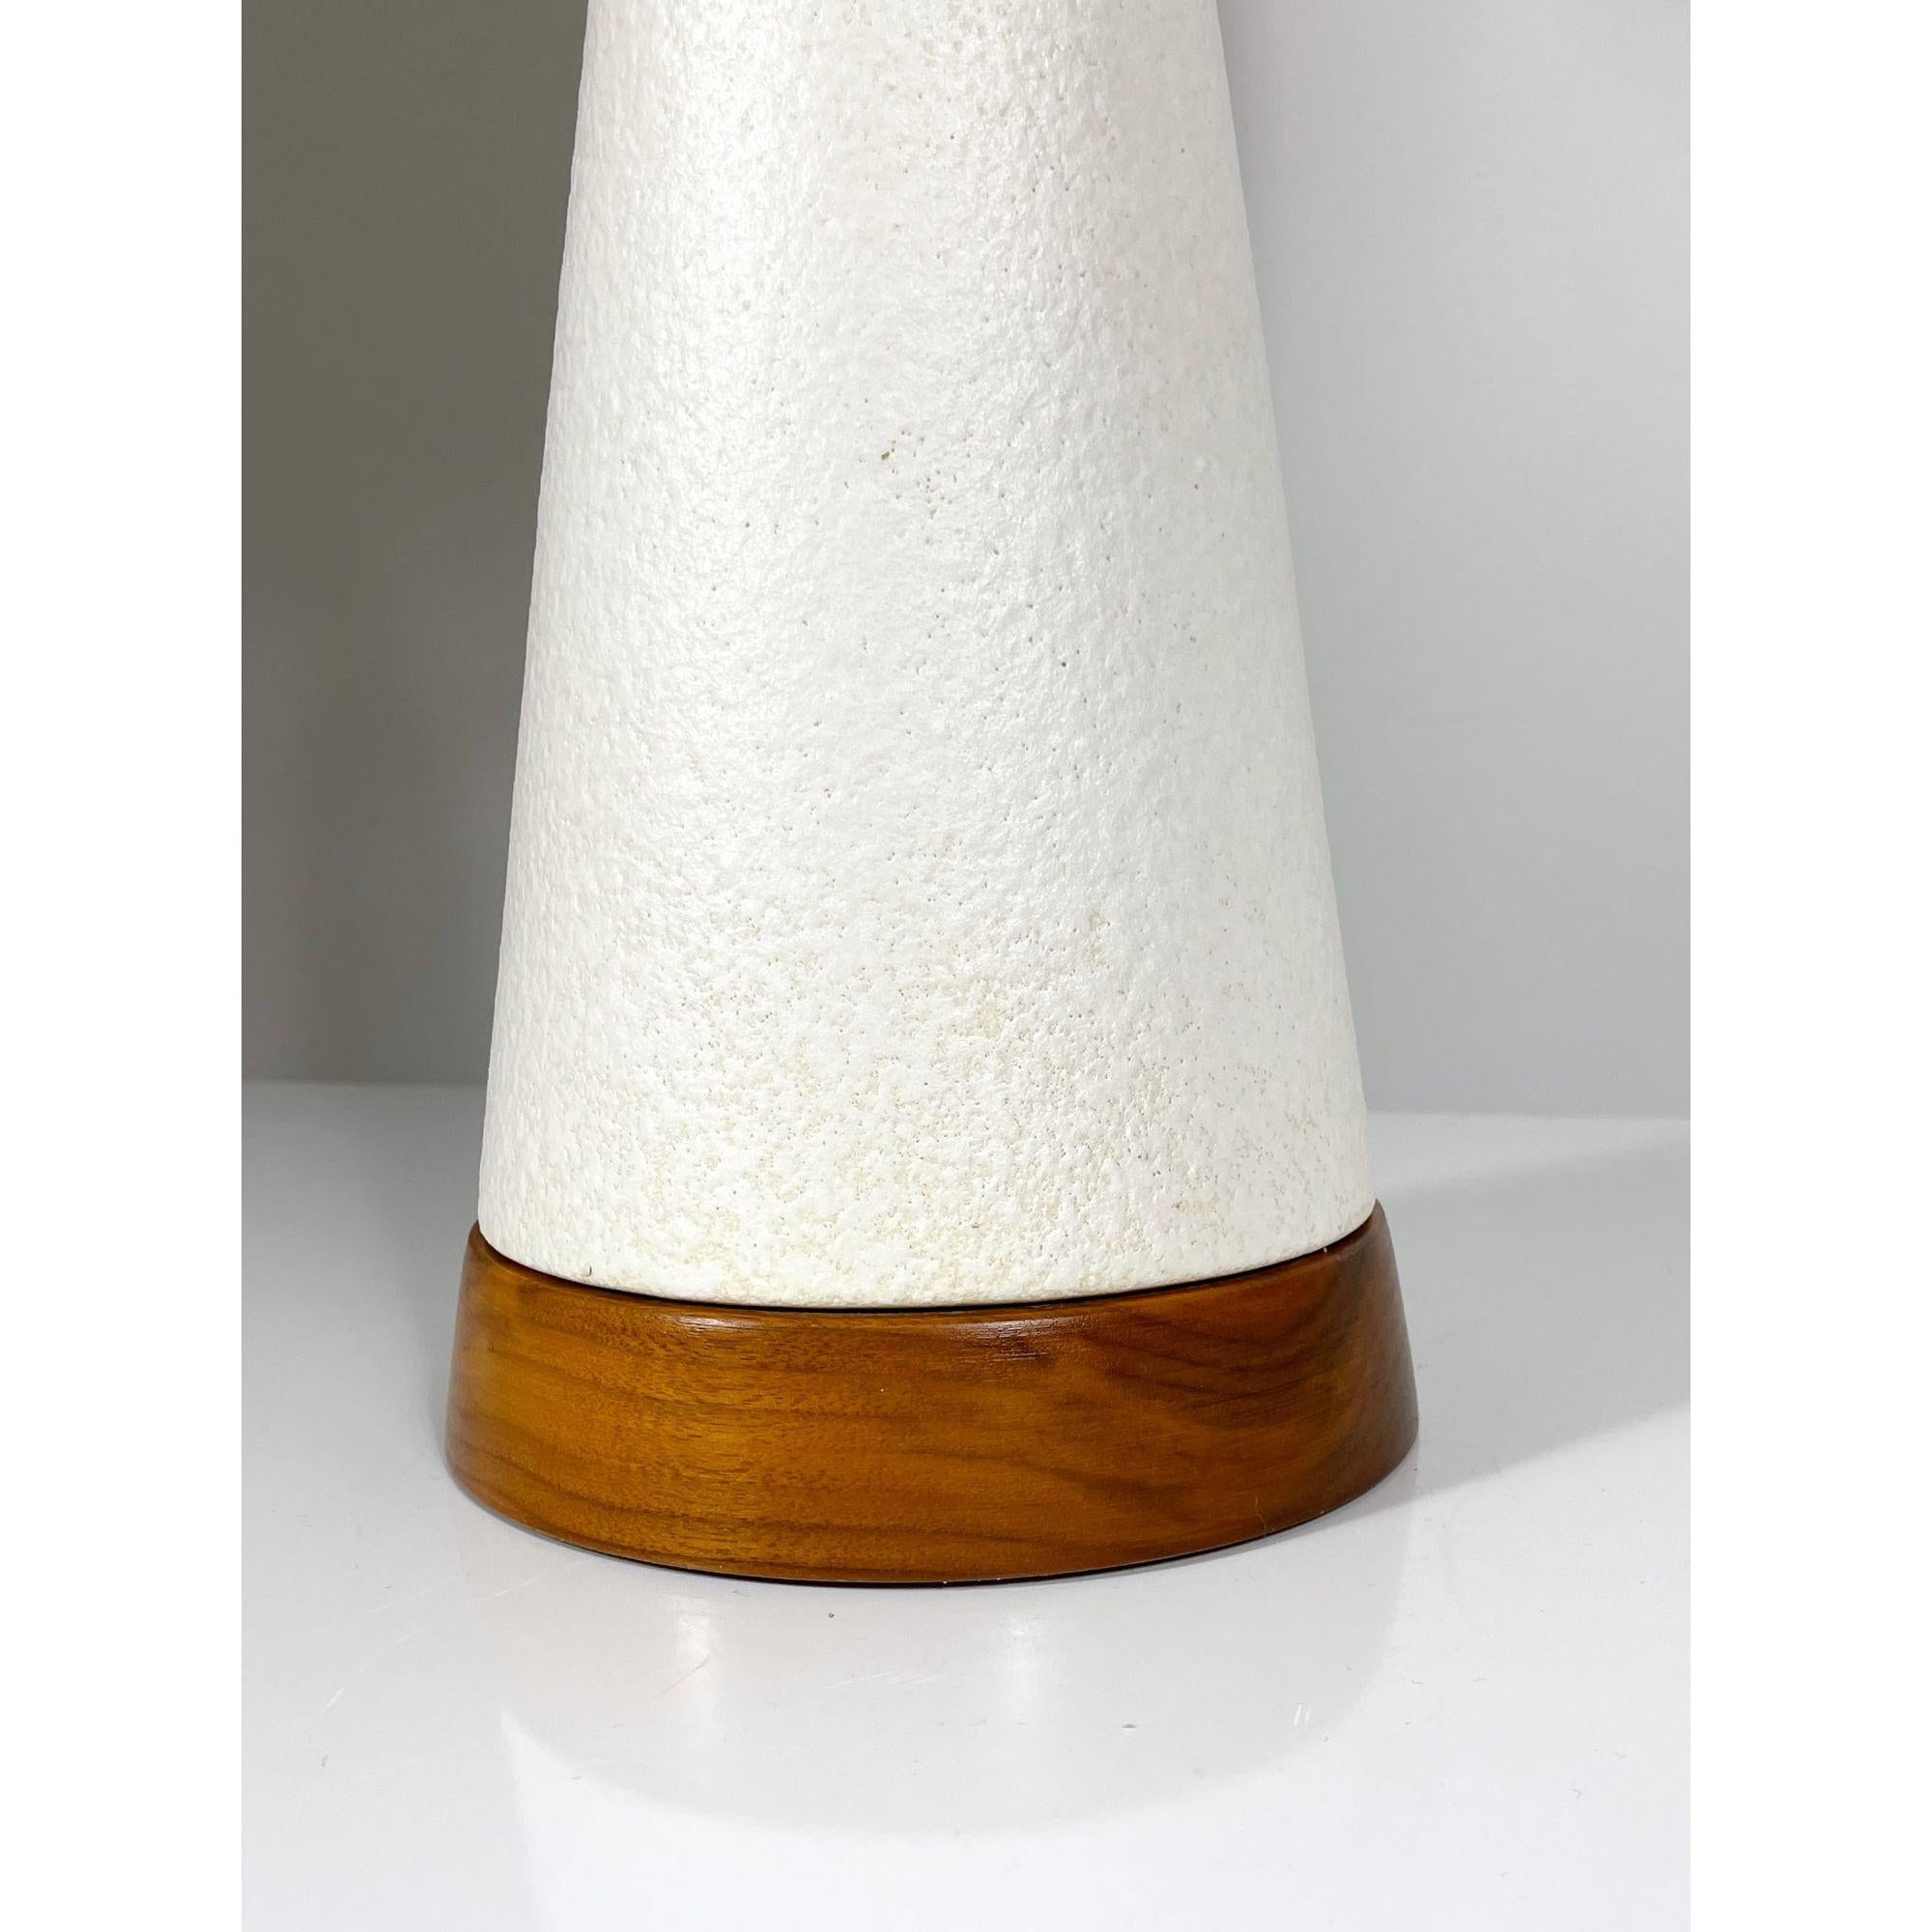 Mid Century Modern Vintage White Ceramic Cone Table Lamp, circa 1960s For Sale 1